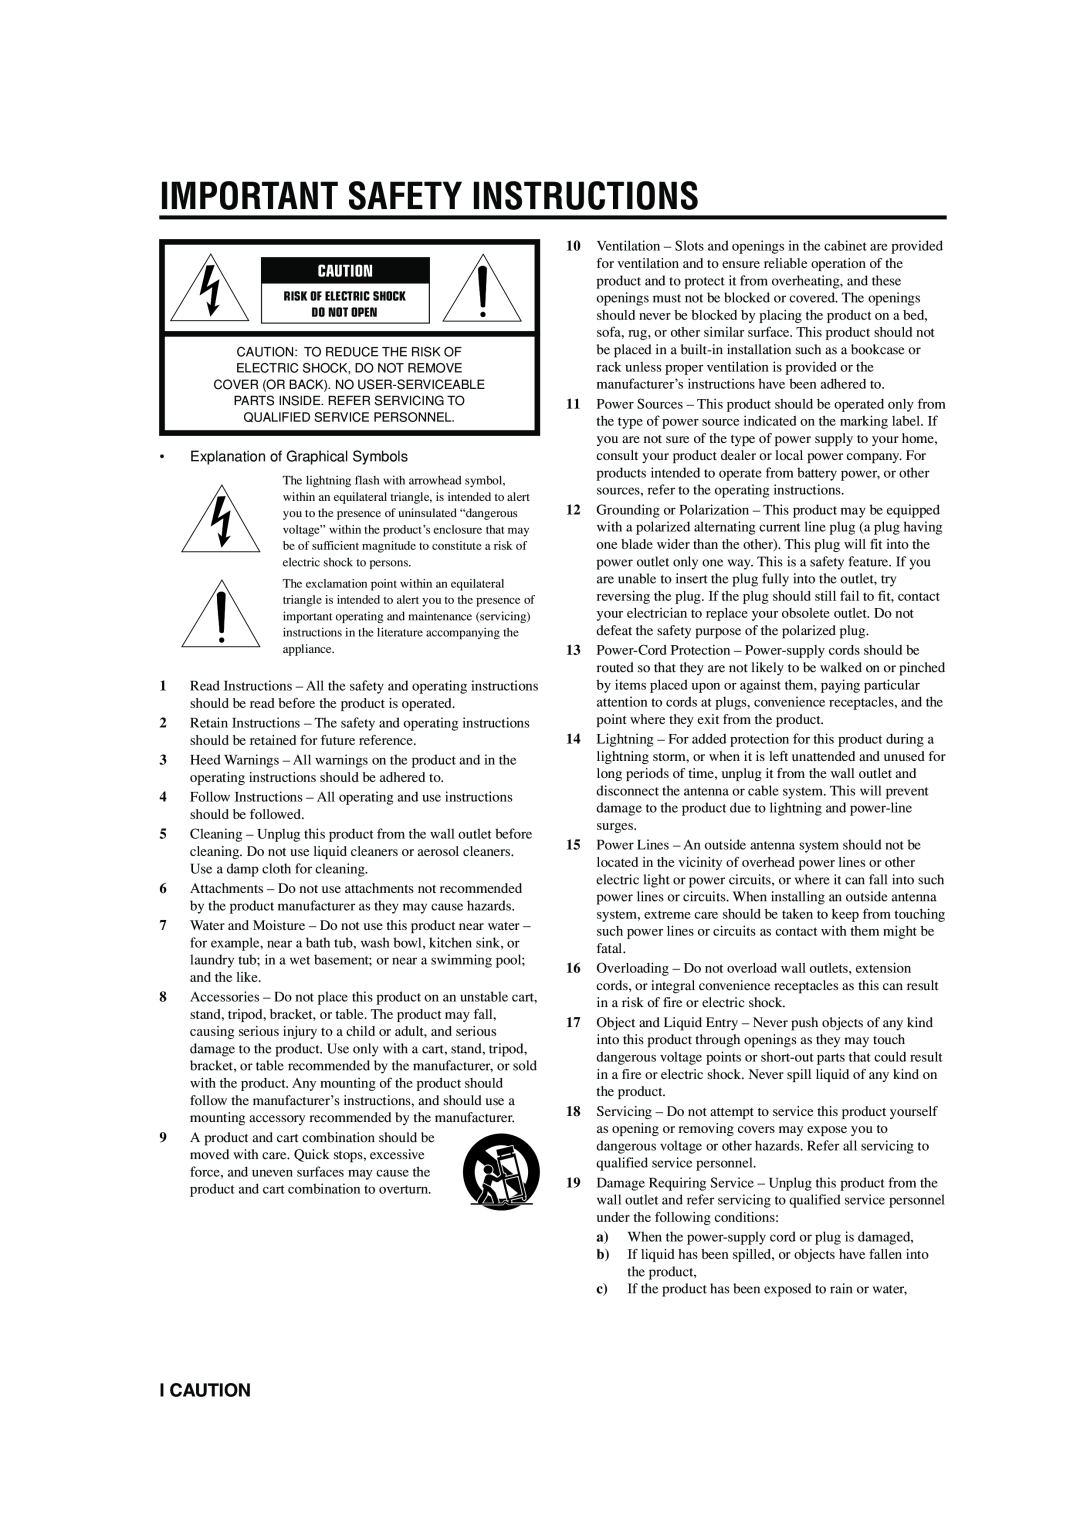 Yamaha HTR-5640 owner manual I Caution, Important Safety Instructions 